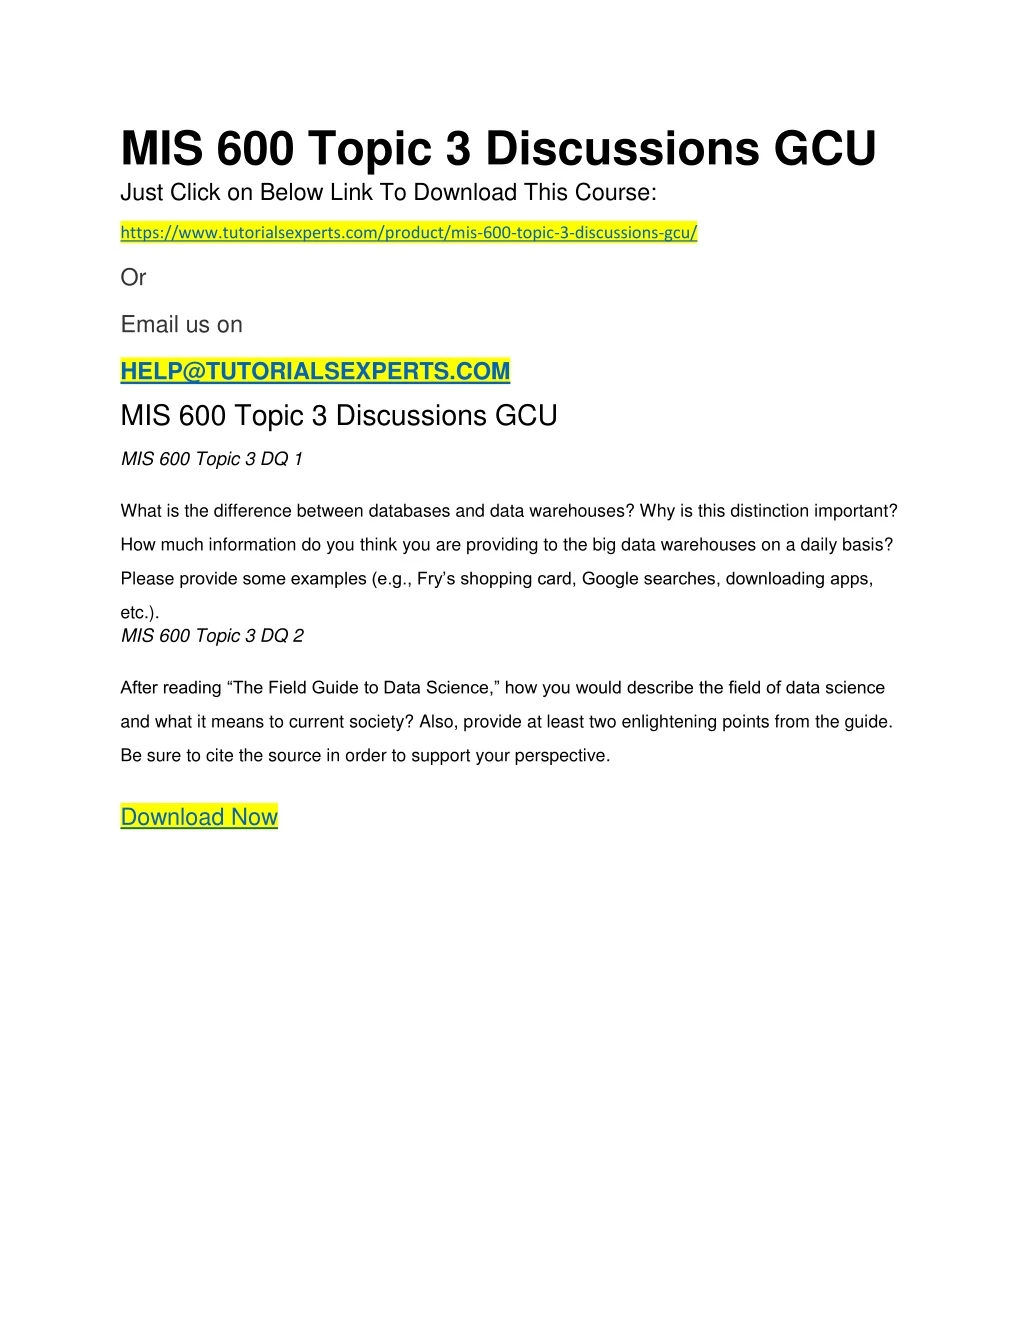 mis 600 topic 3 discussions gcu just click